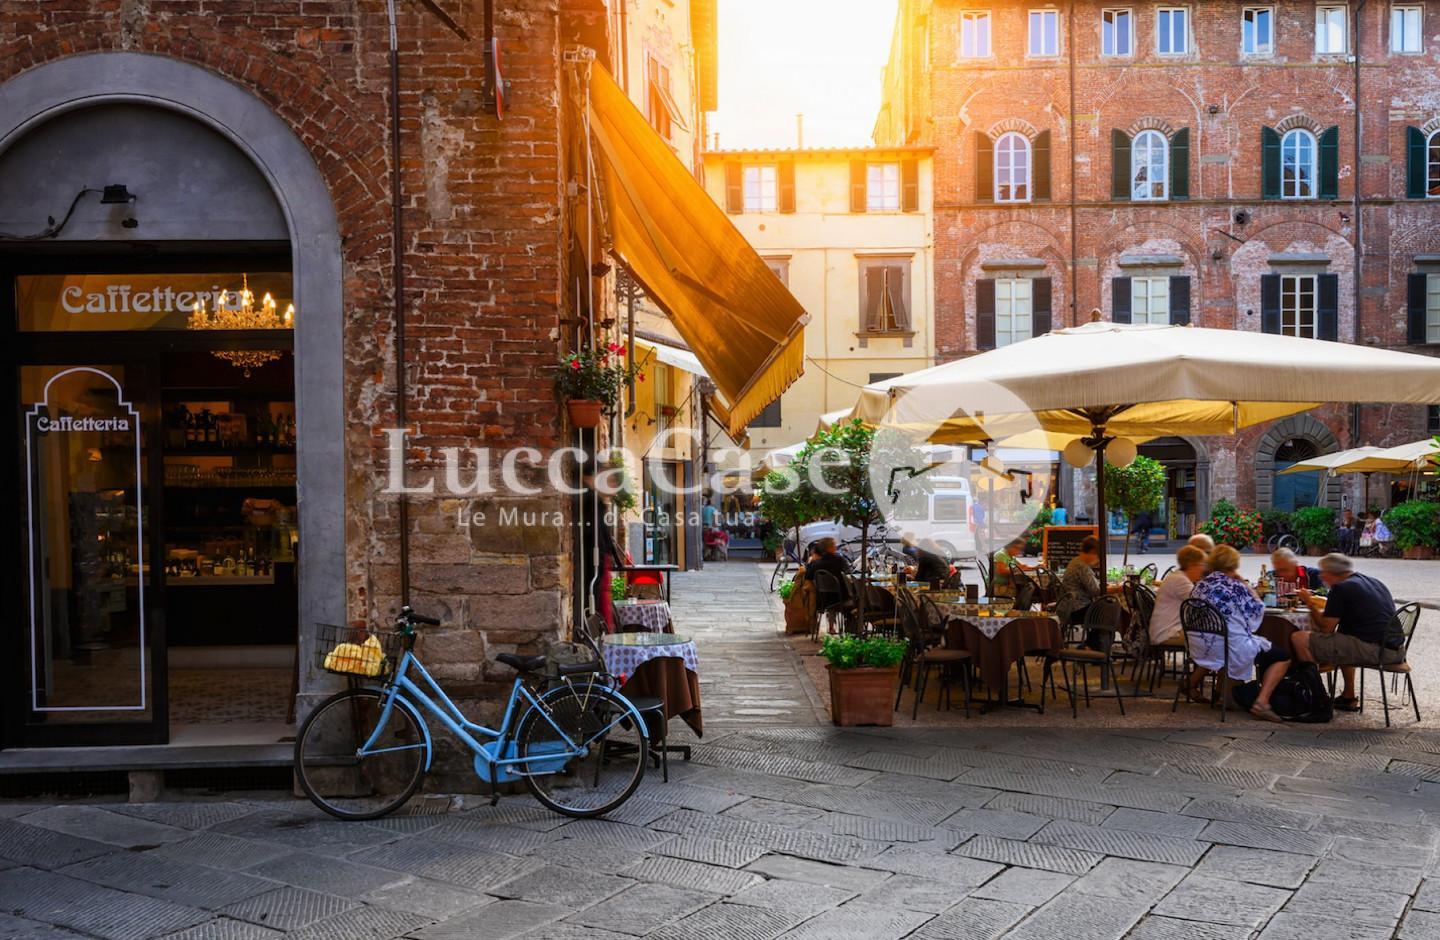 Locale commerciale in affitto, Lucca centro storico